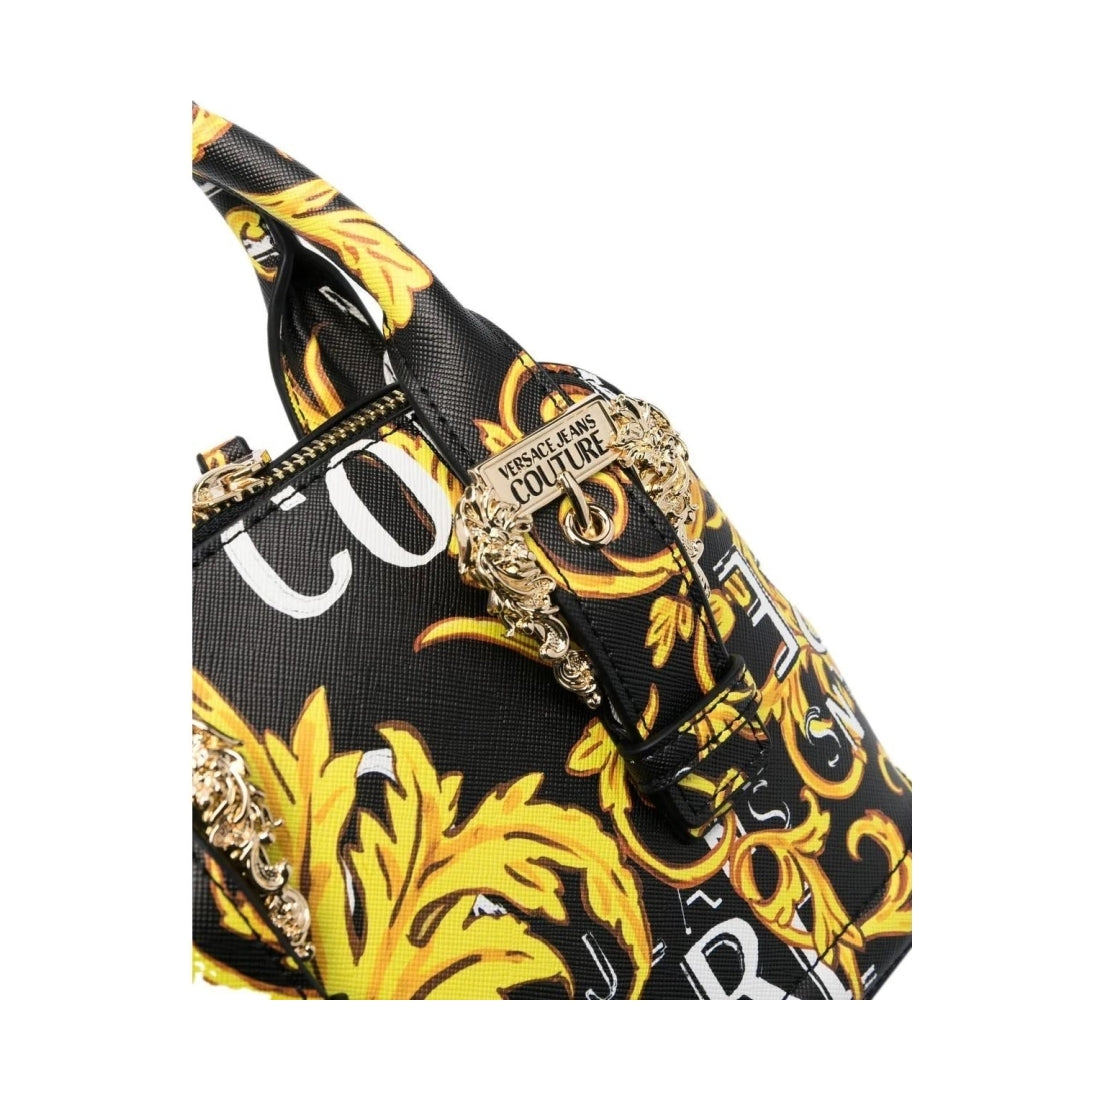 Versace Jeans Couture womens black, gold couture handbag | Vilbury London